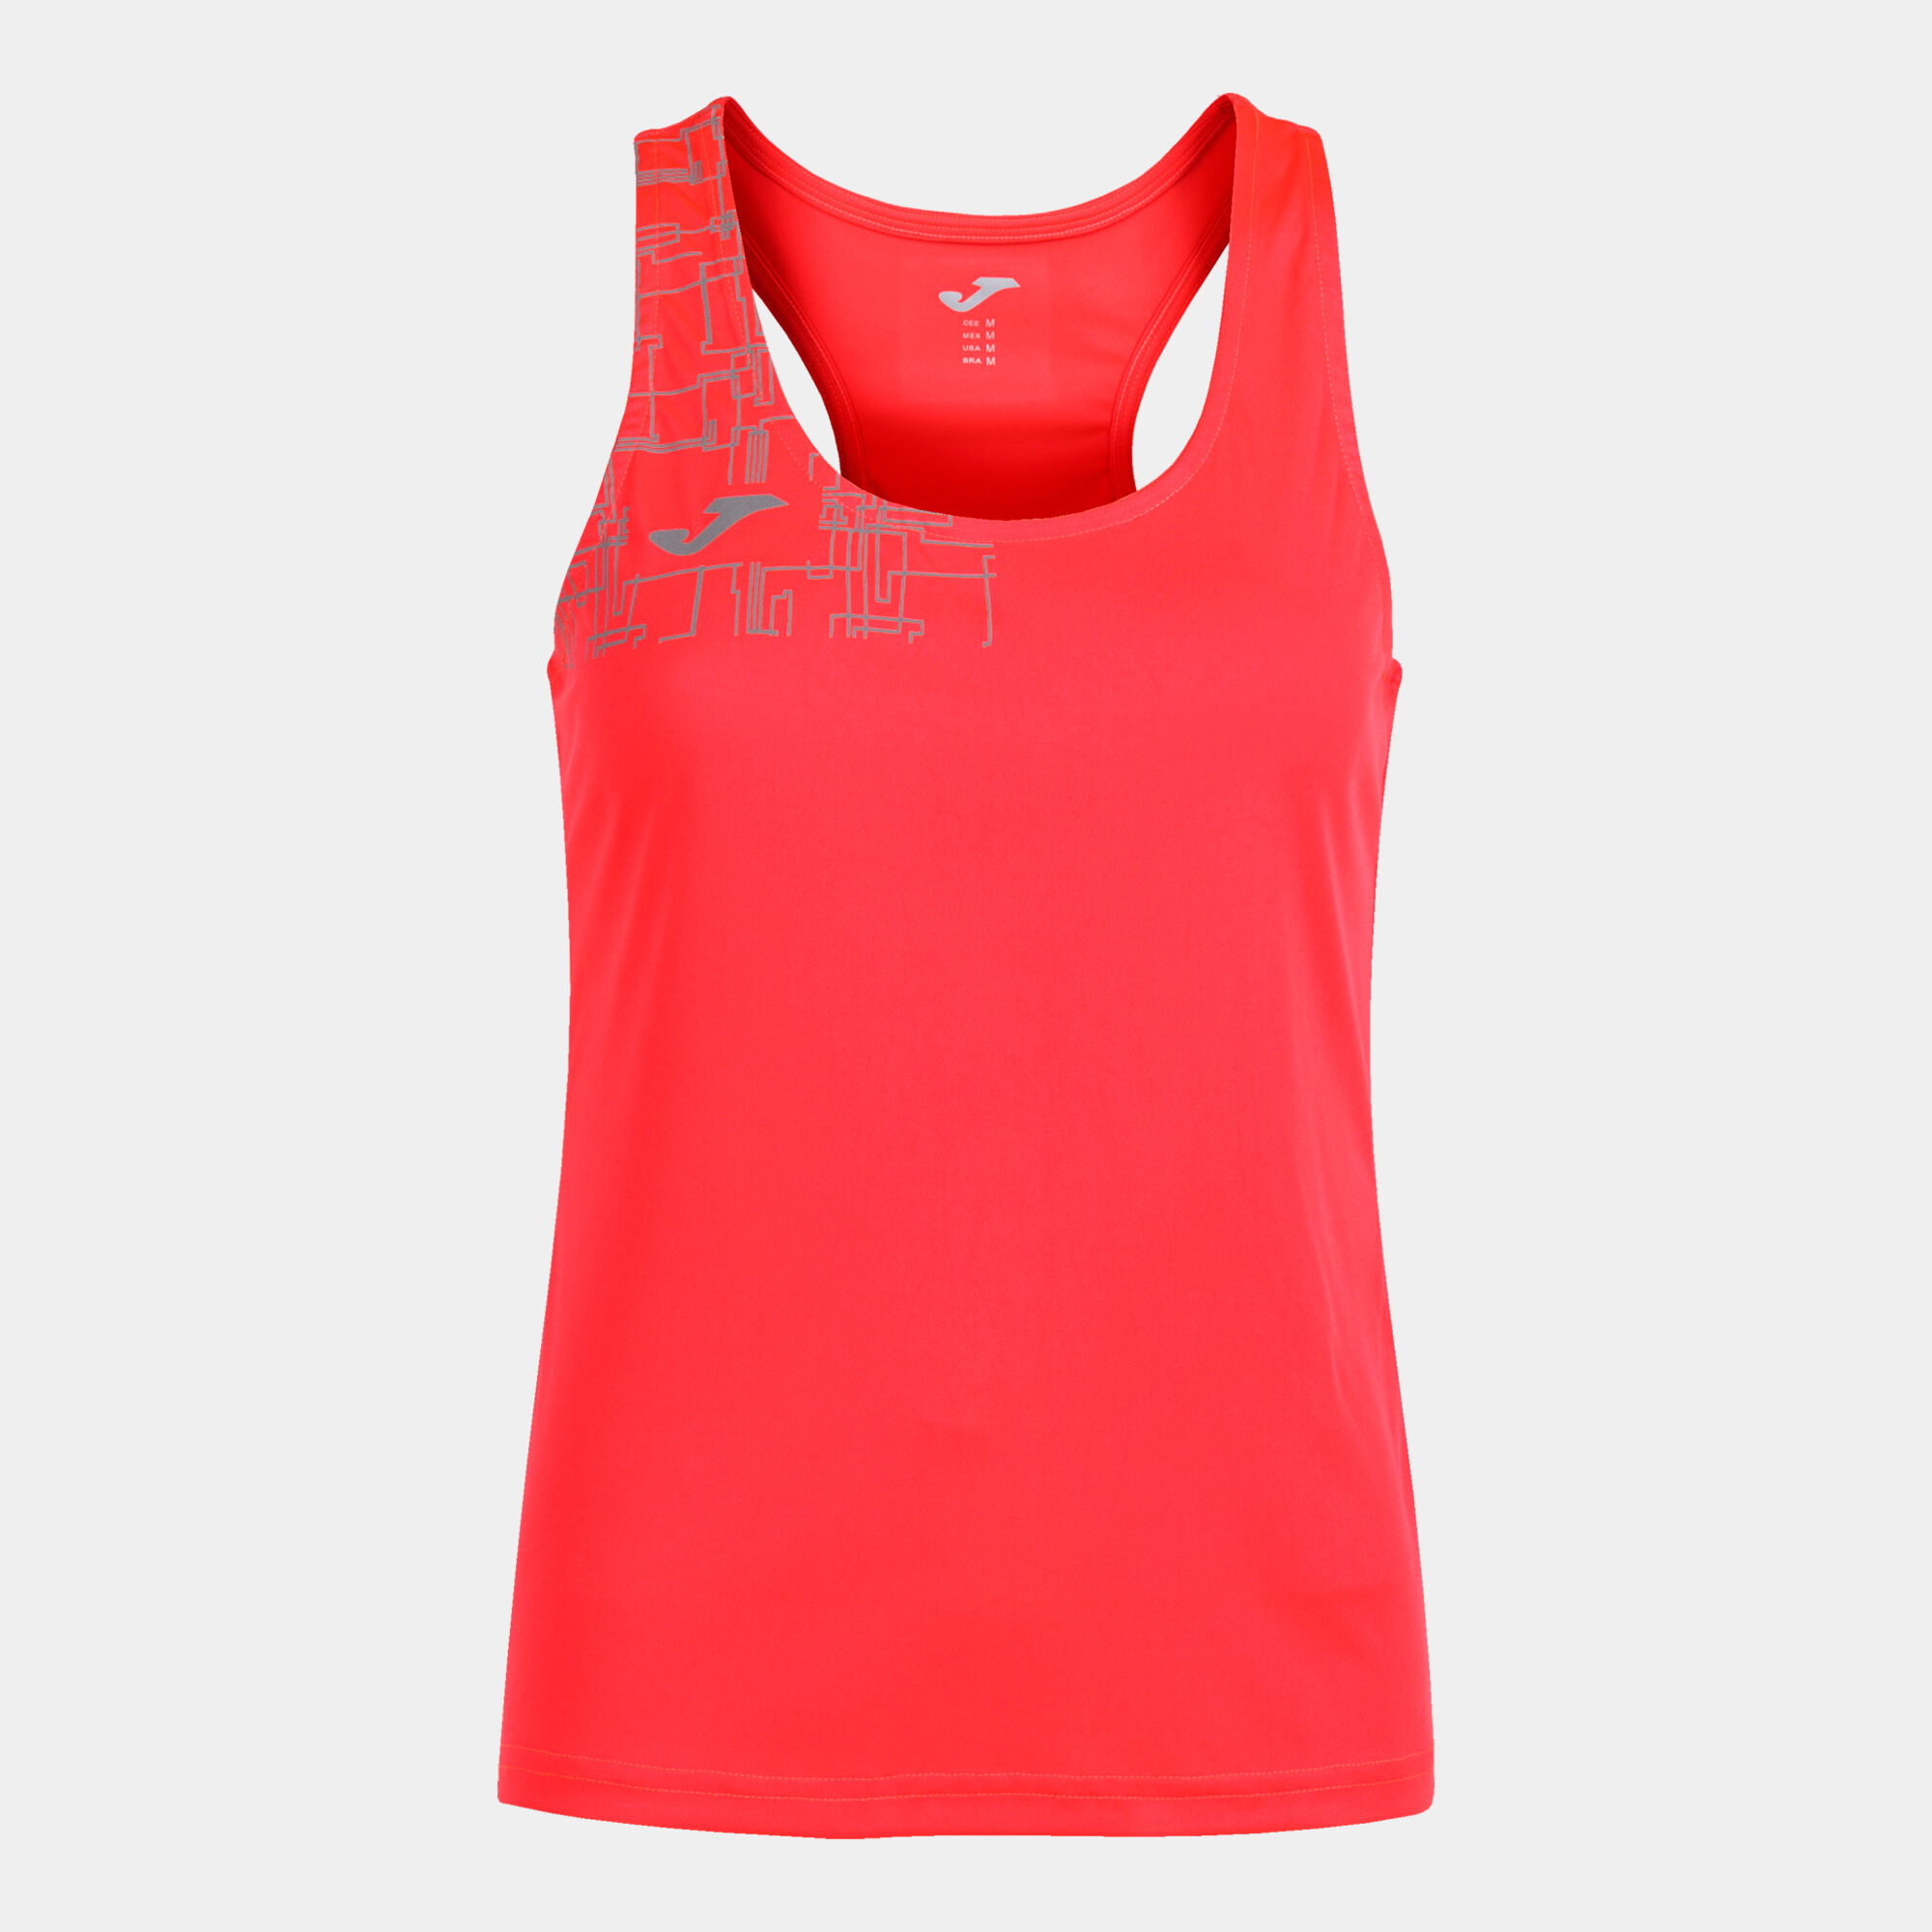 T-shirt de alça mulher Elite VIII coral fluorescente